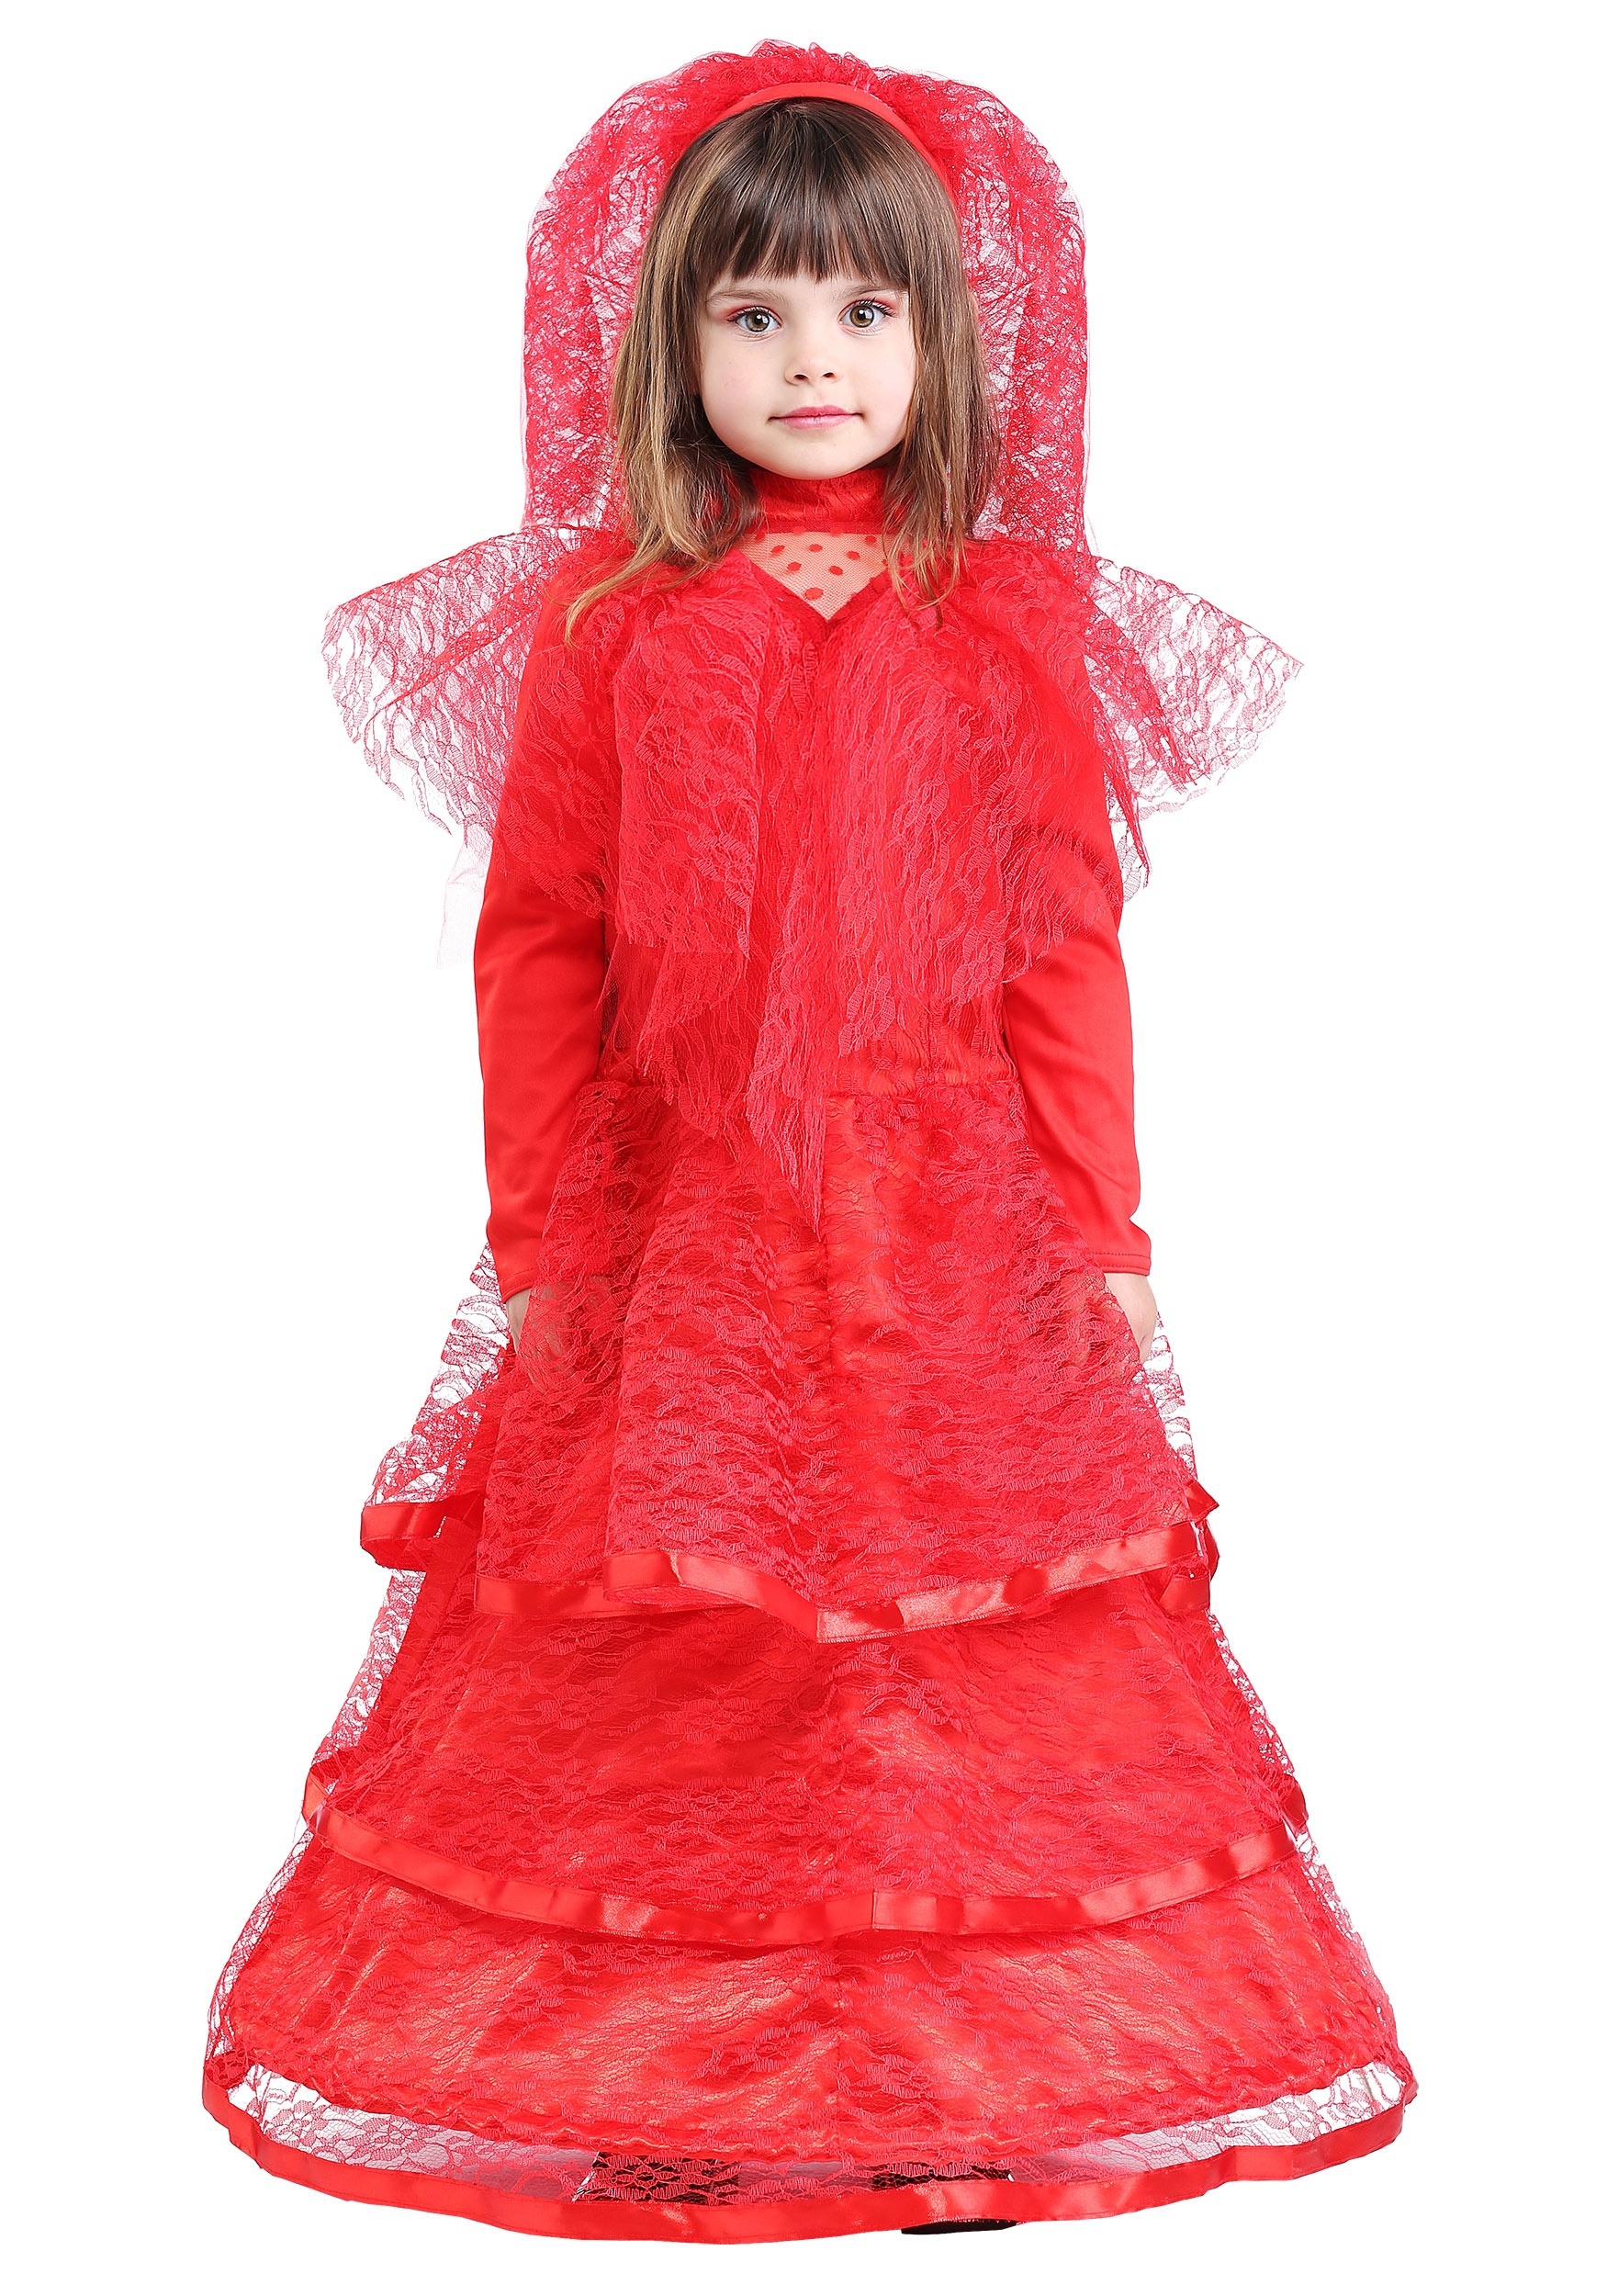 Gothic Red Wedding Toddler Dress